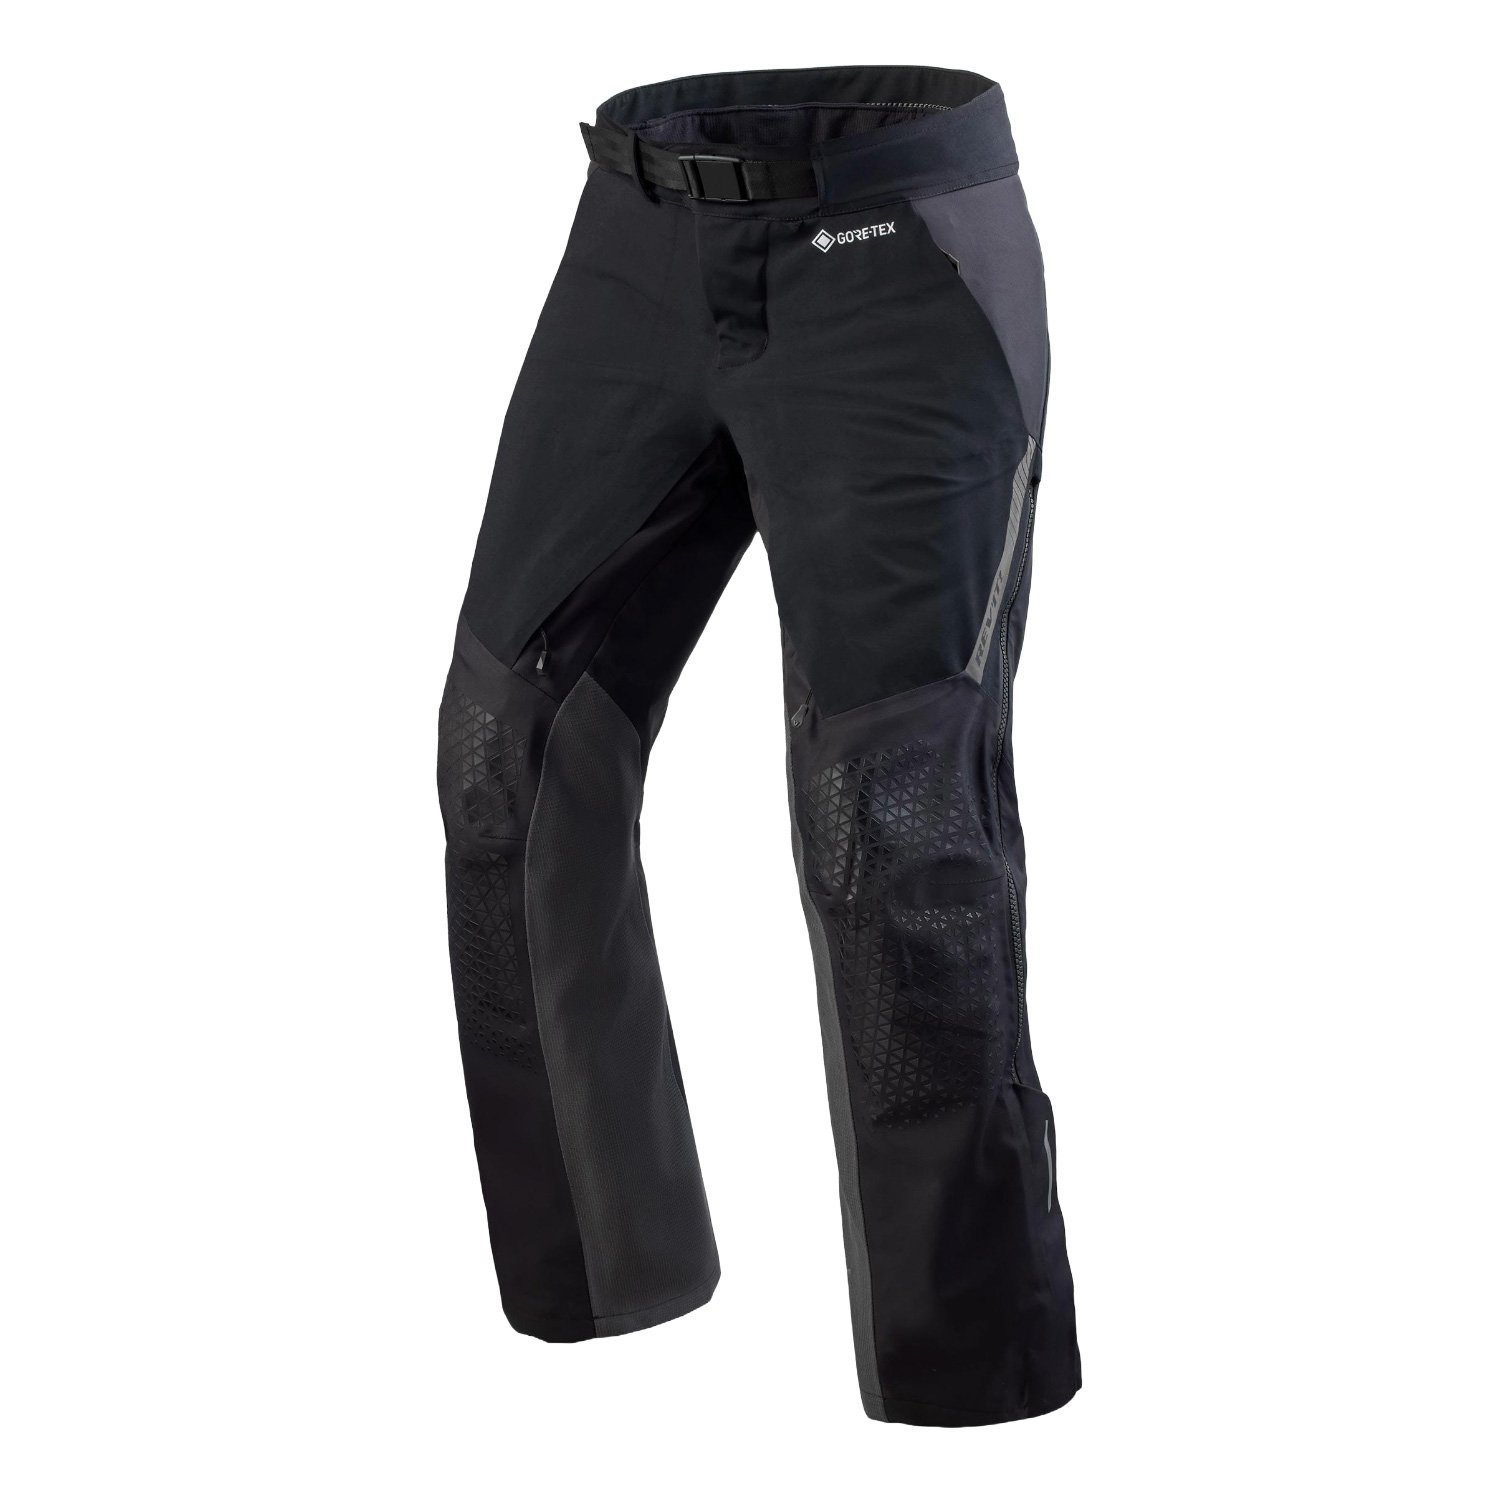 Image of REV'IT! Stratum GTX Black Grey Long Motorcycle Pants Size 2XL ID 8700001351300